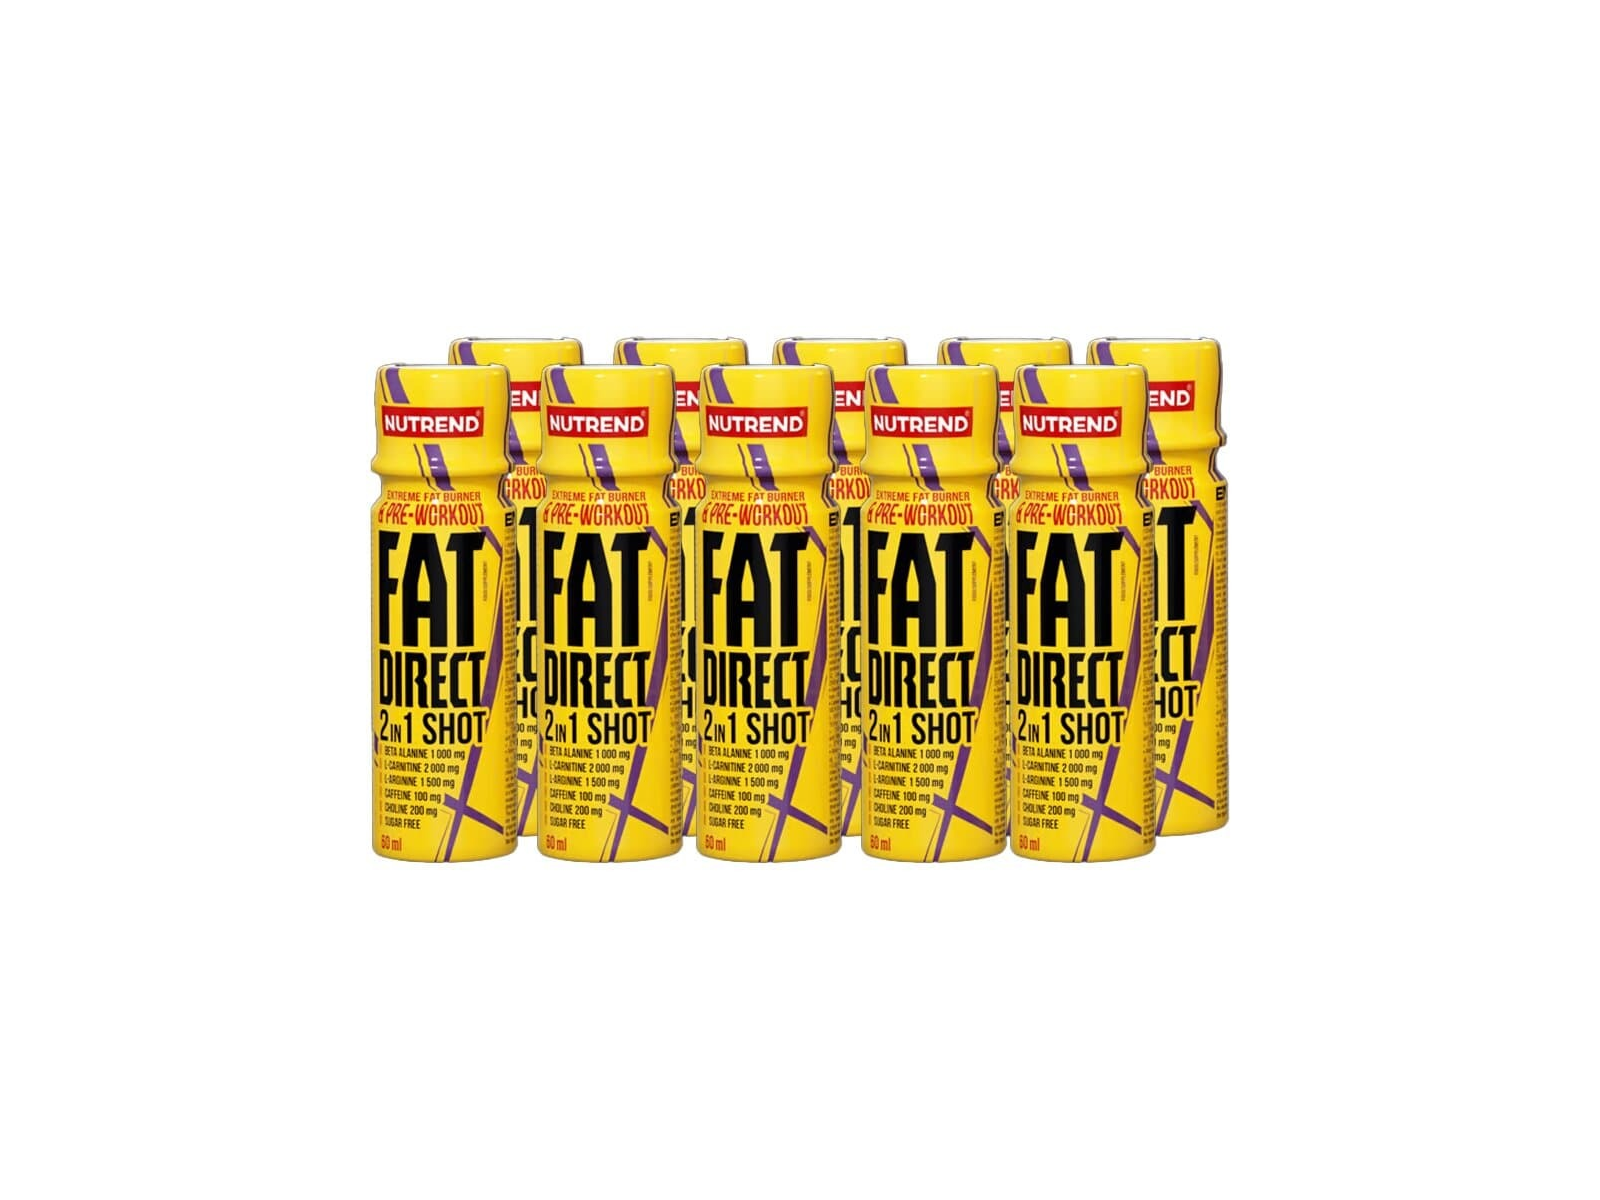 FAT DIRECT SHOT (10 x 60 ml) - NUTREND